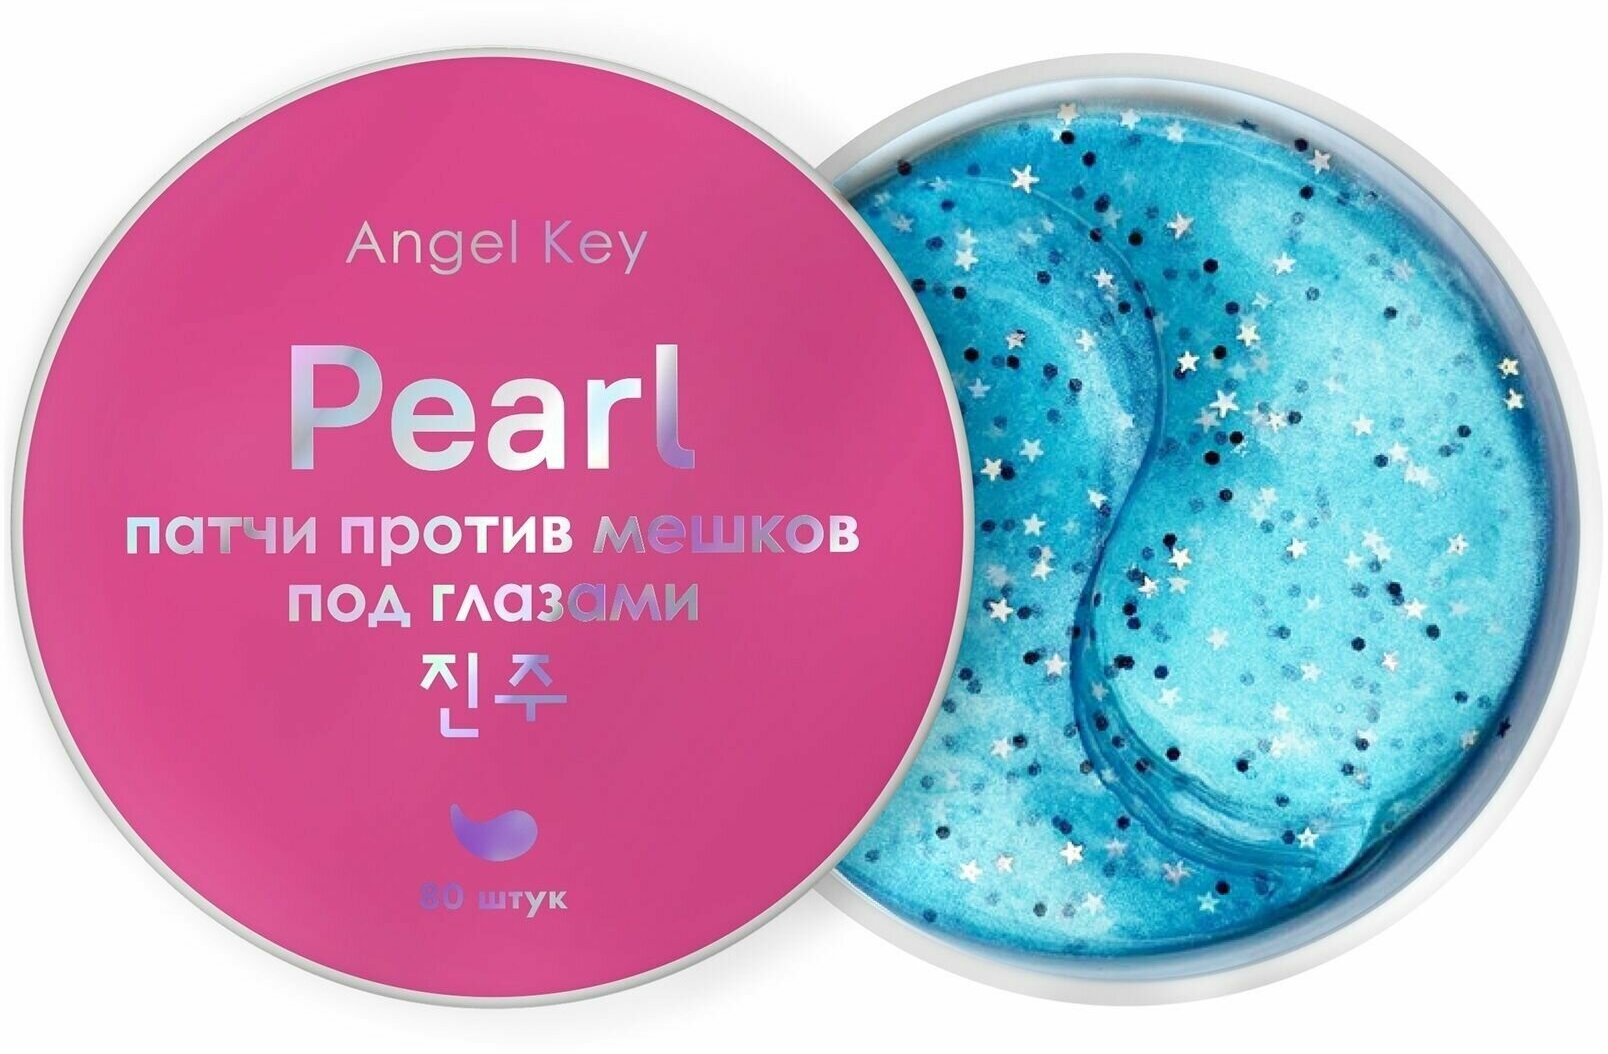 Гидрогелевые патчи ANGEL KEY Pearl на основе экстракта жемчуга против мешков под глазами 80 шт